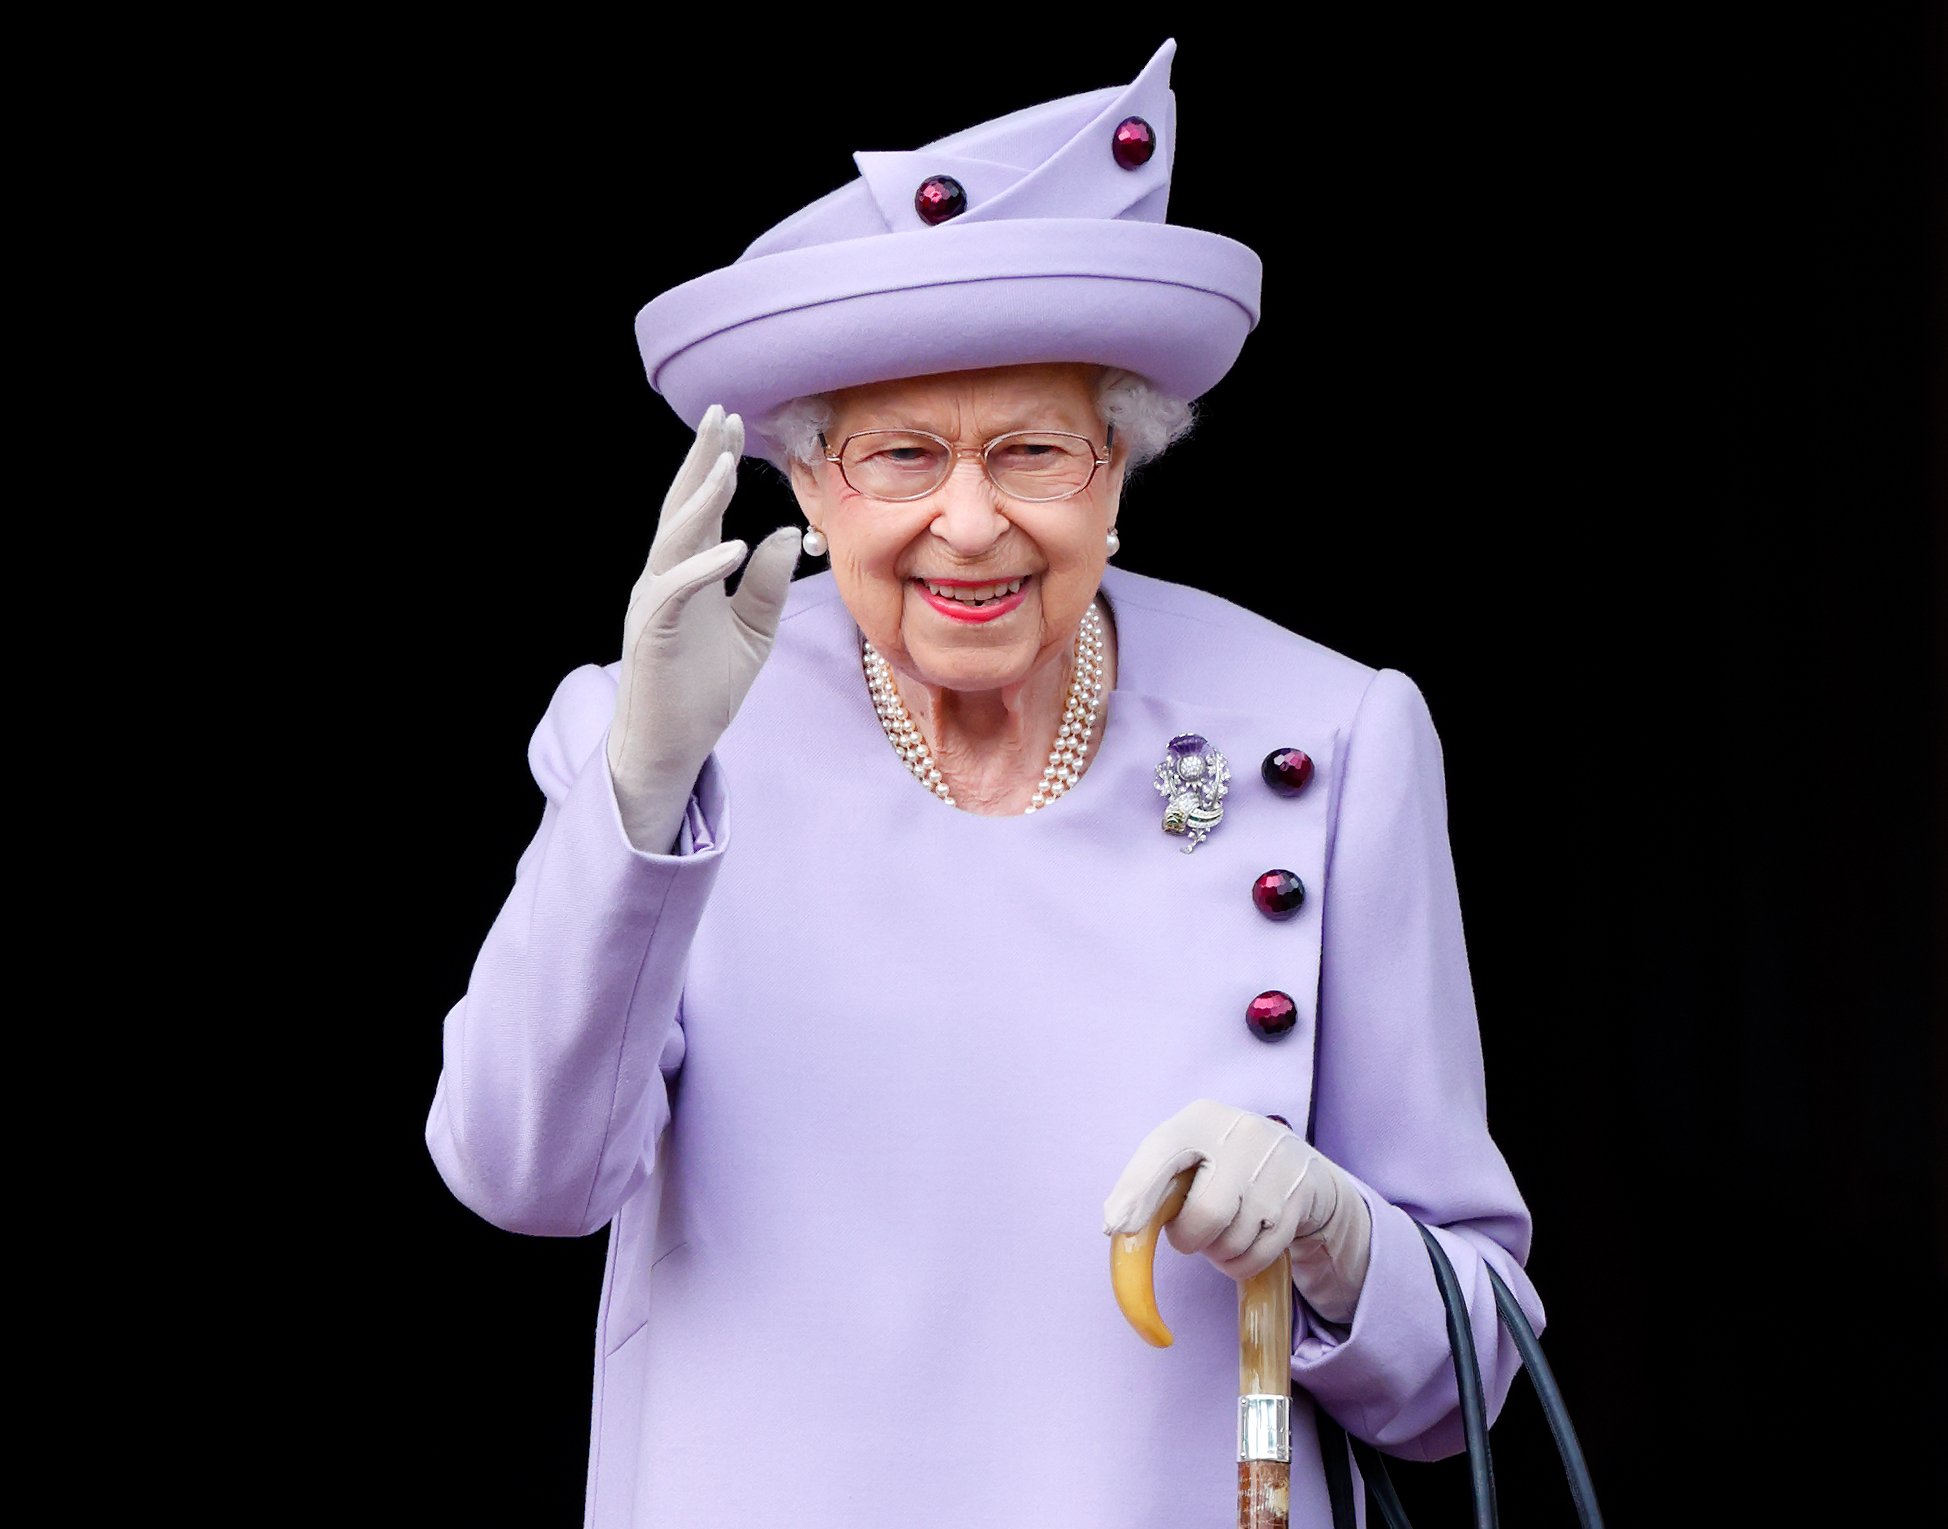 Britain's Queen Elizabeth II dies aged 96